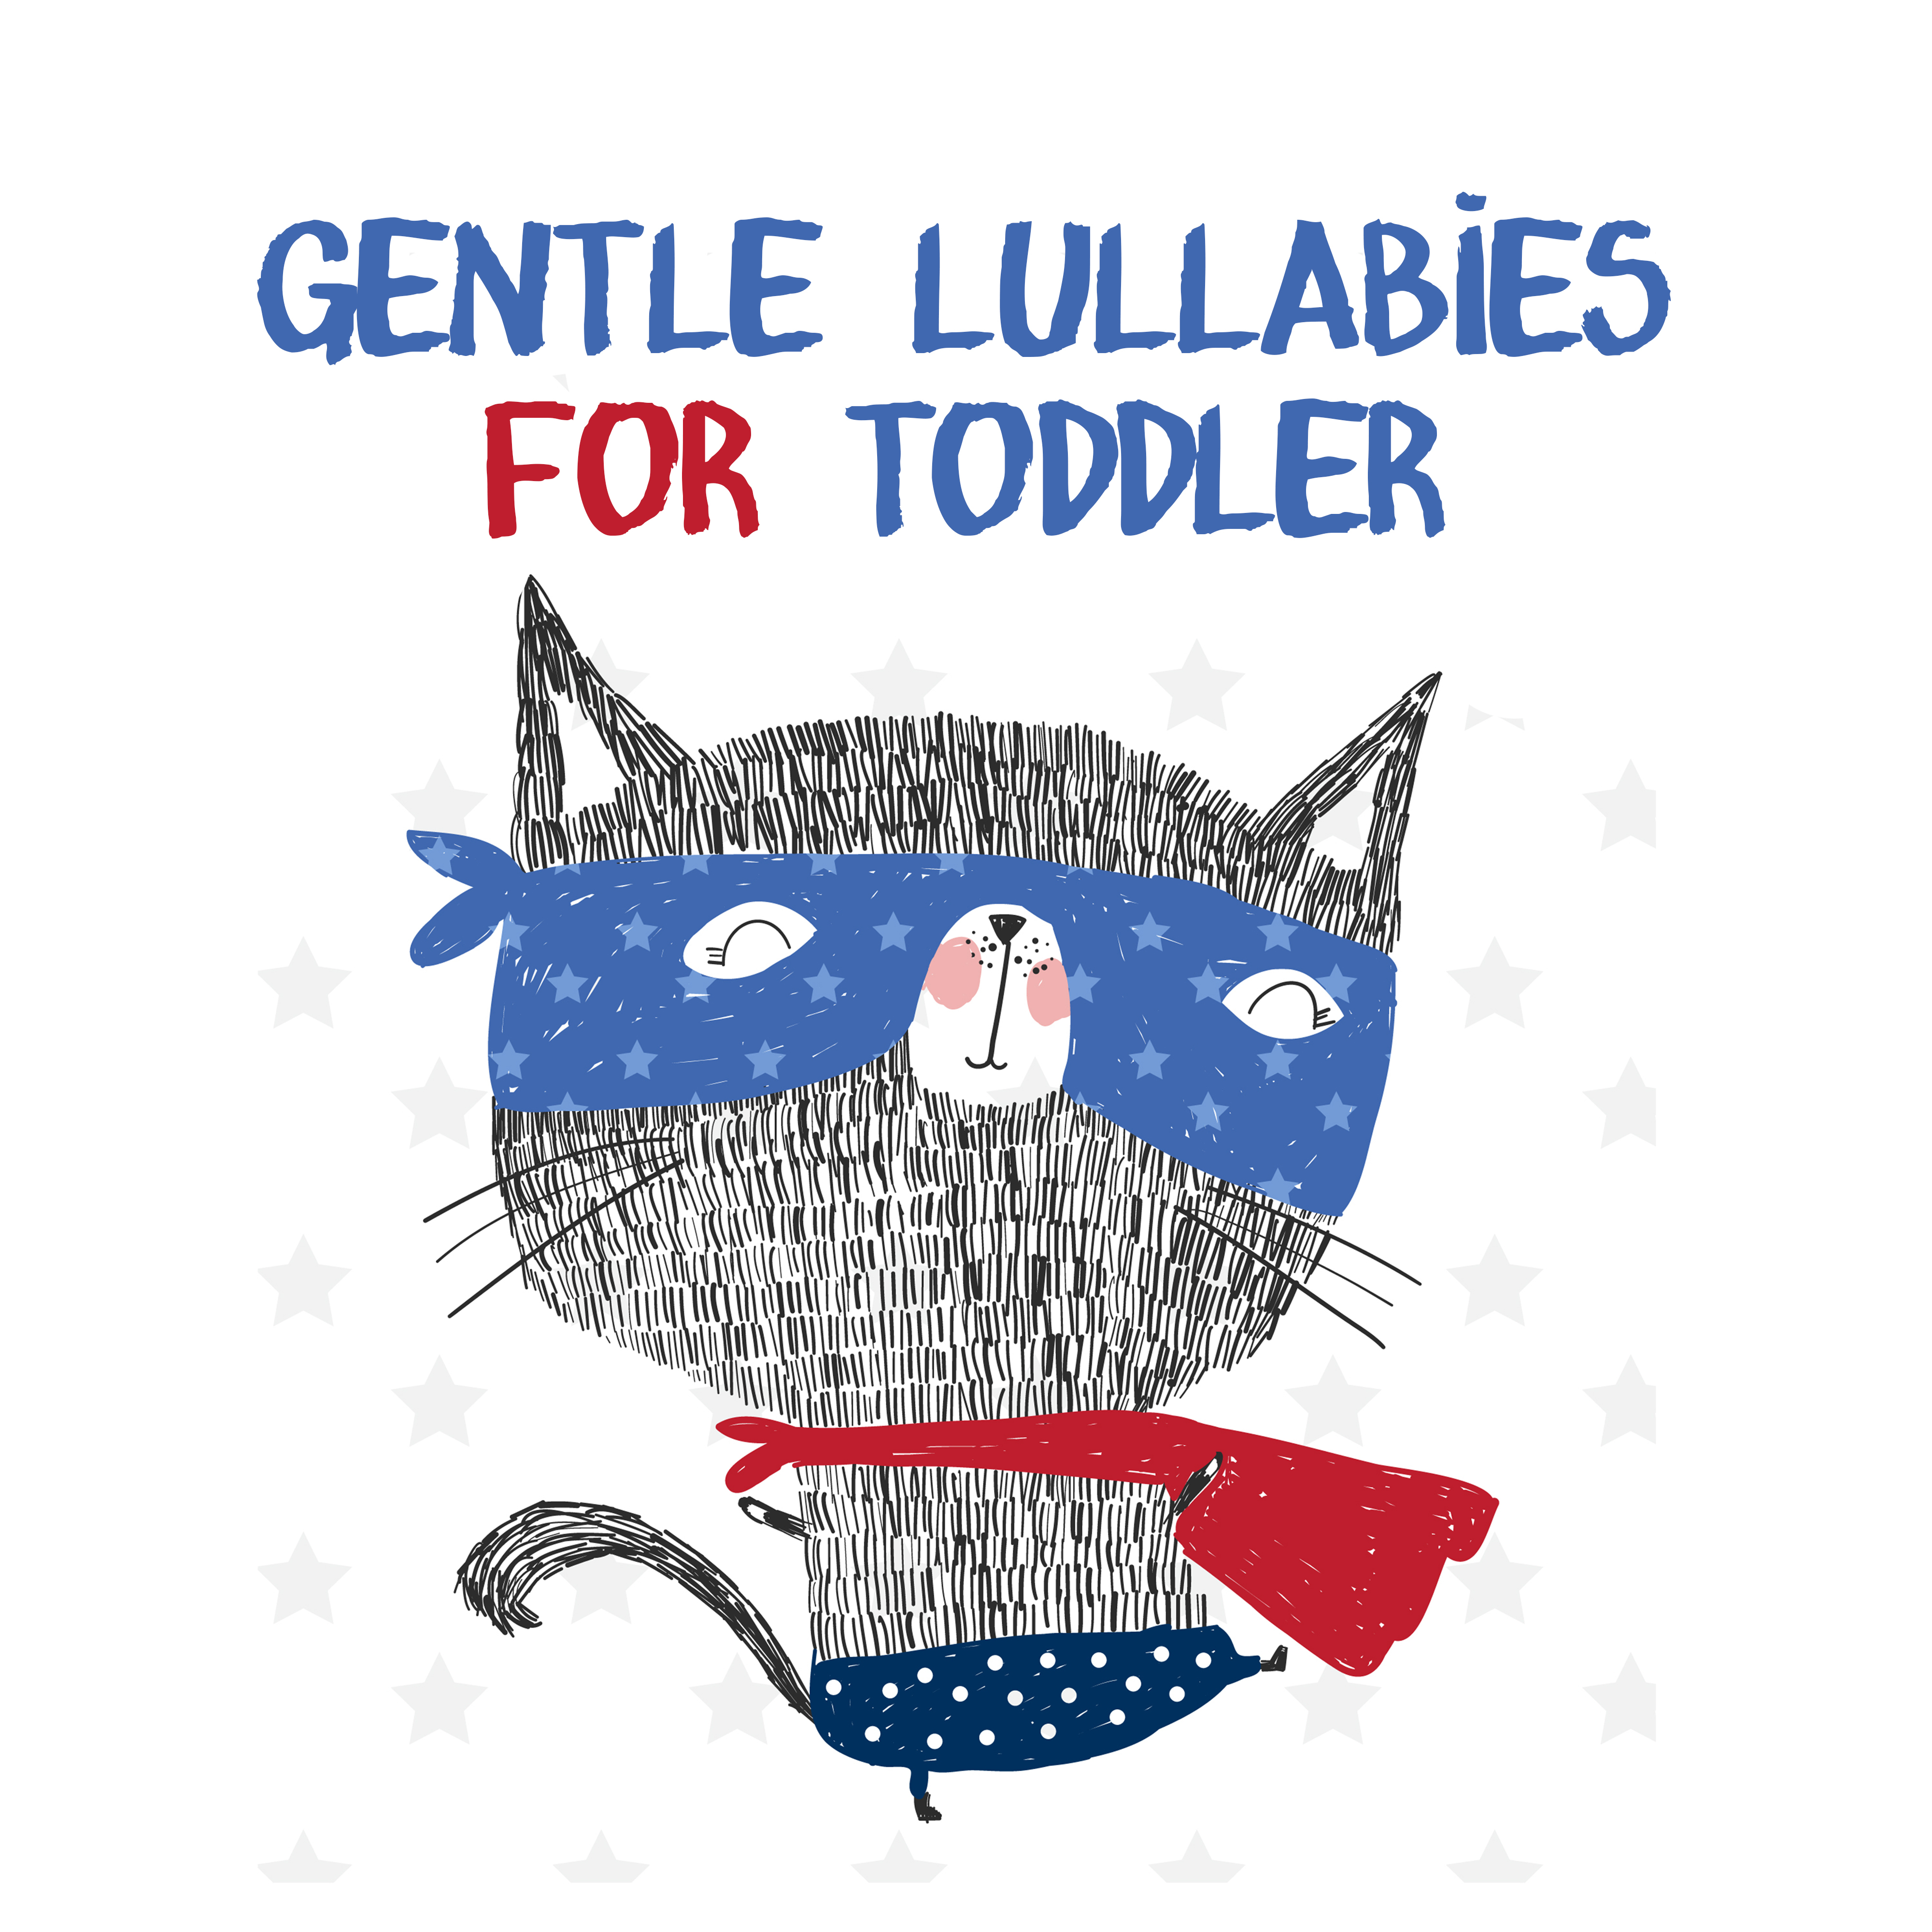 Gentle Lullabies for Toddler